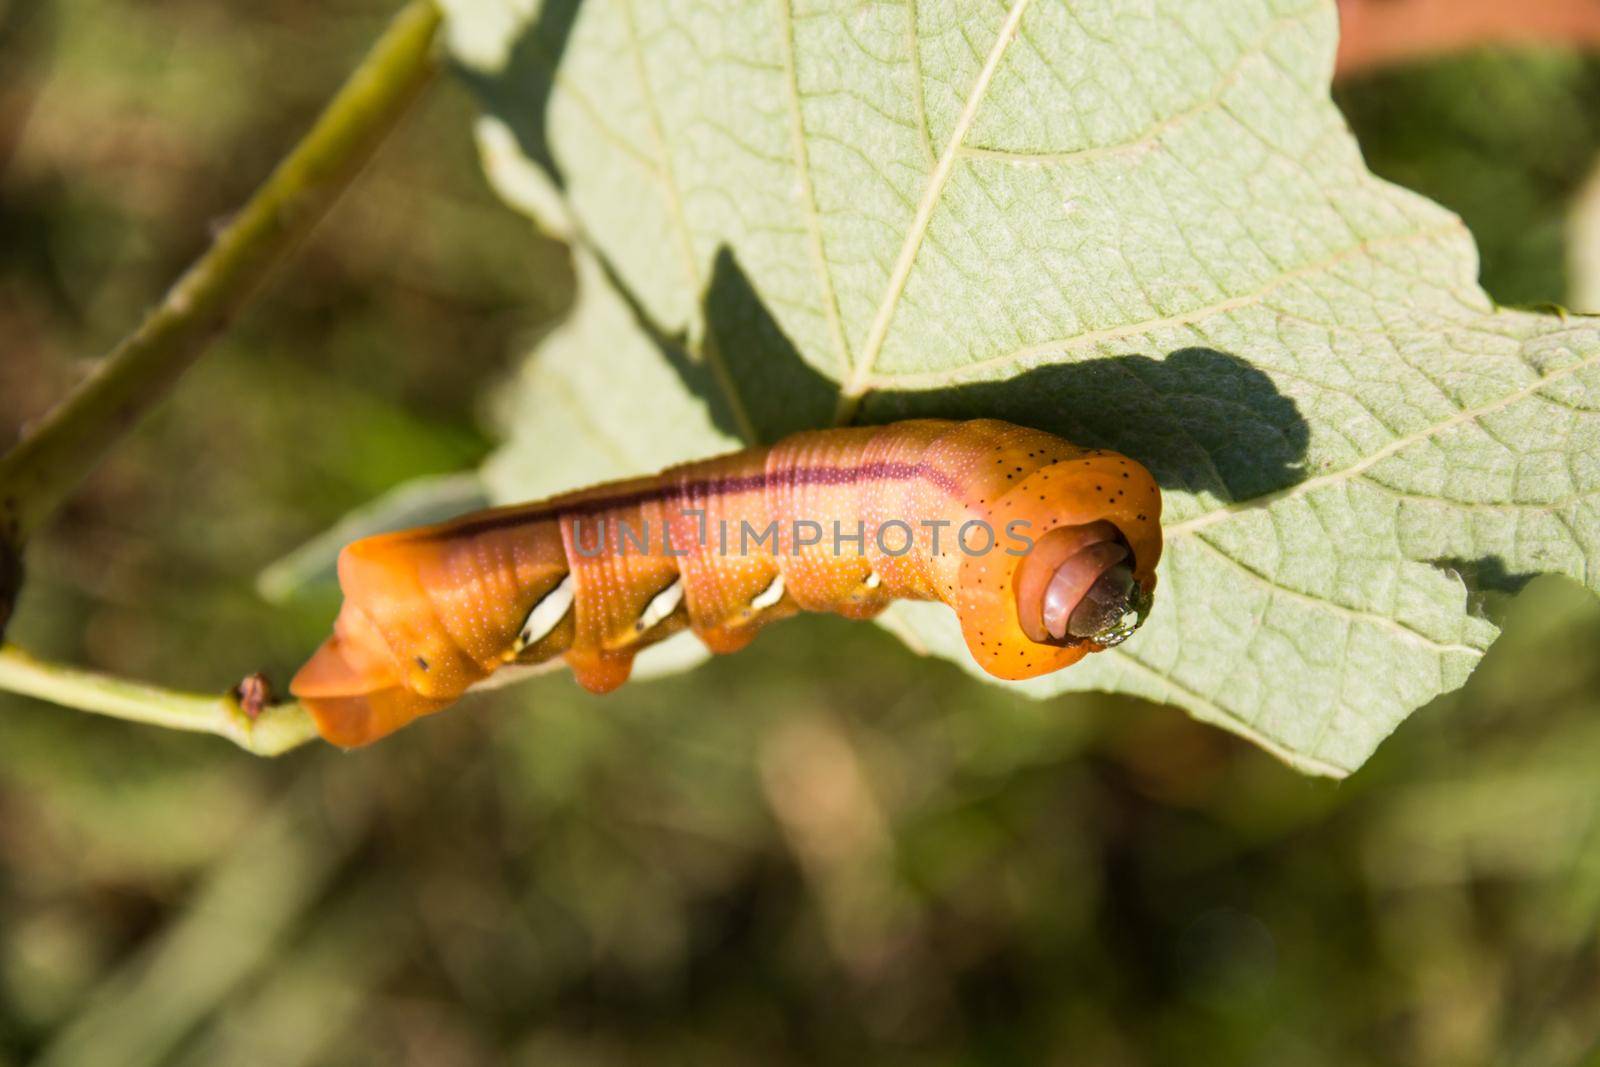 Eumorpha pandorus or sphinx moth caterpillar eating on the leaf, in spring